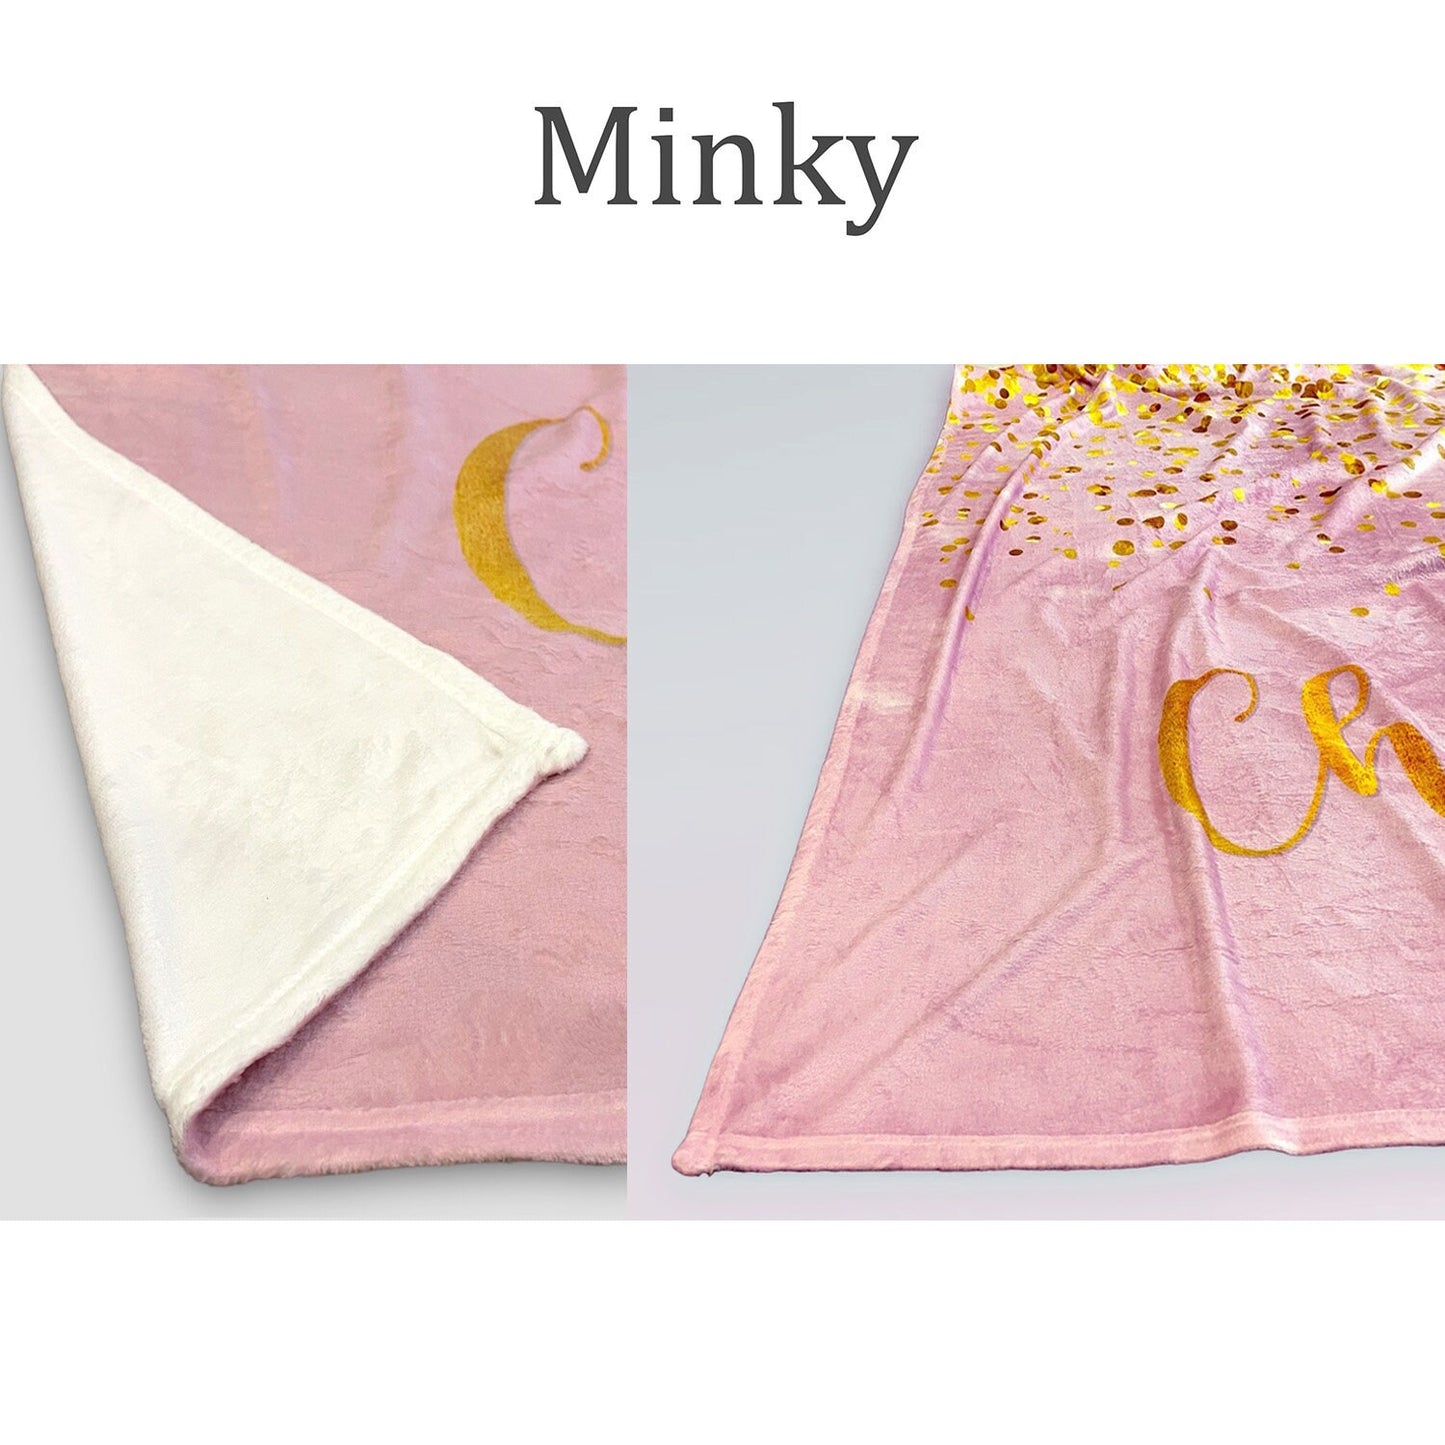 Fire Truck Pattern Design personalize blanket, Minky or Sherpa custom blanket, Baby blanket, birthday gift idea